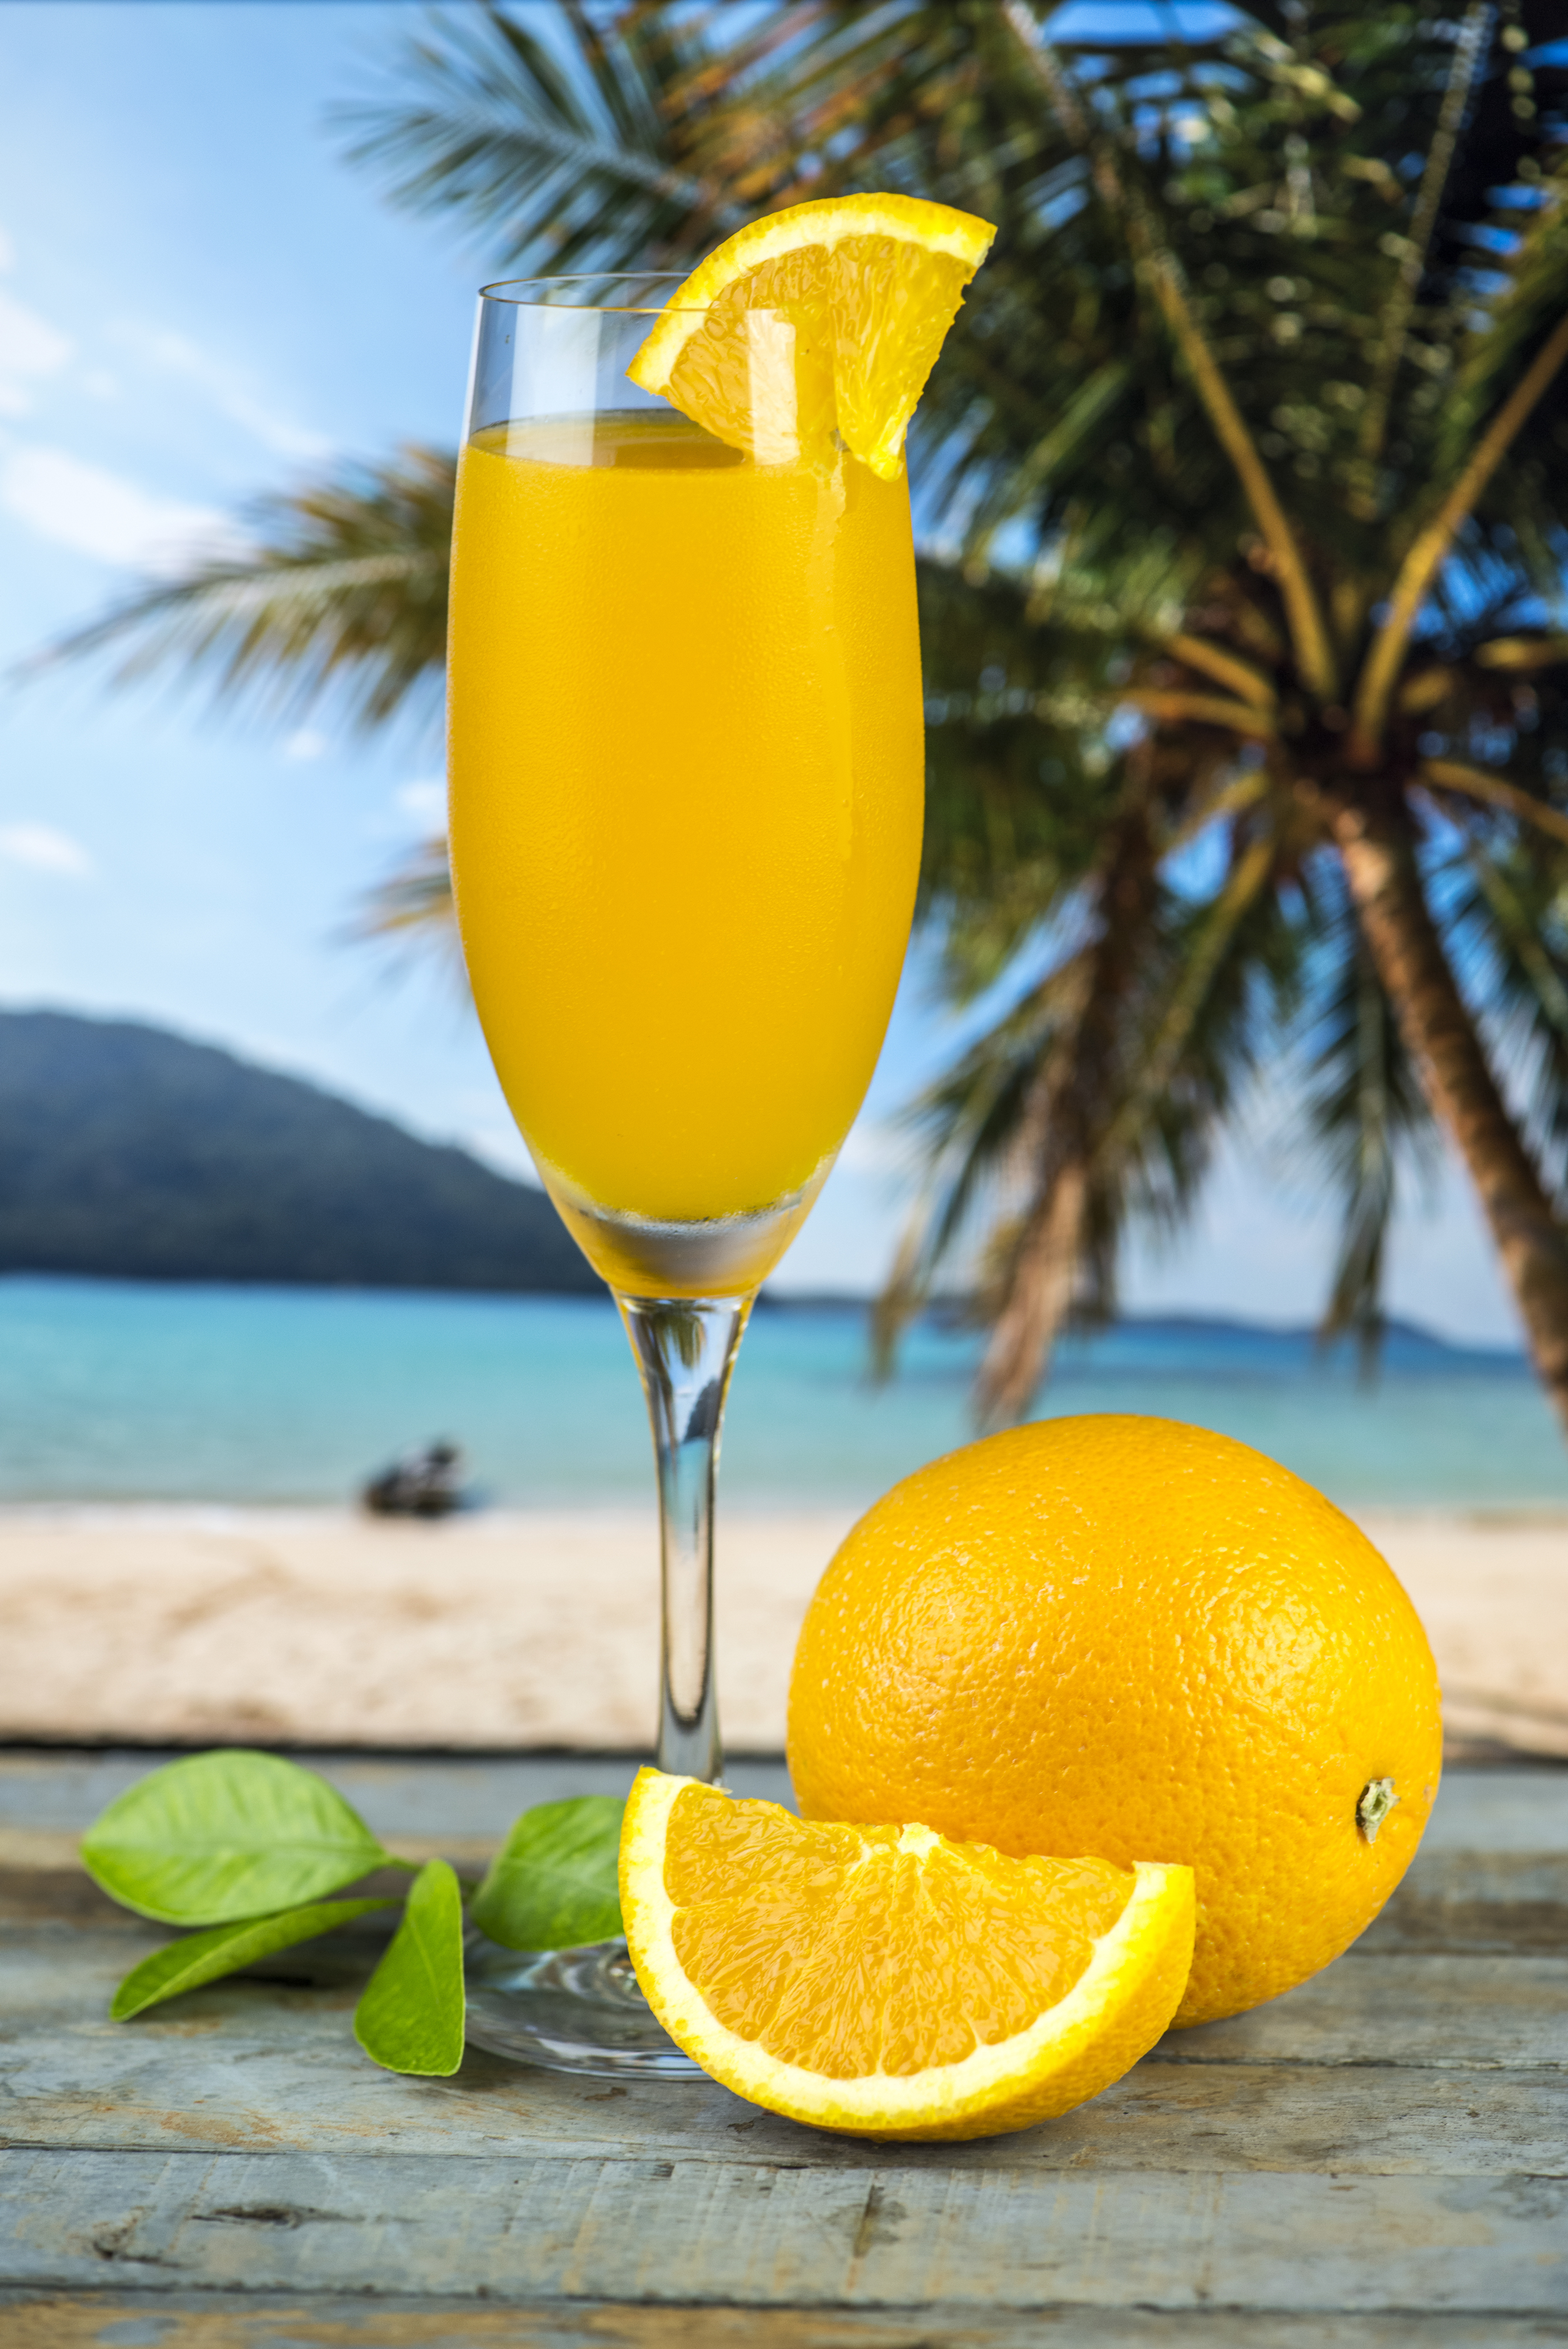 Wallpapers beach beverage citrus on the desktop